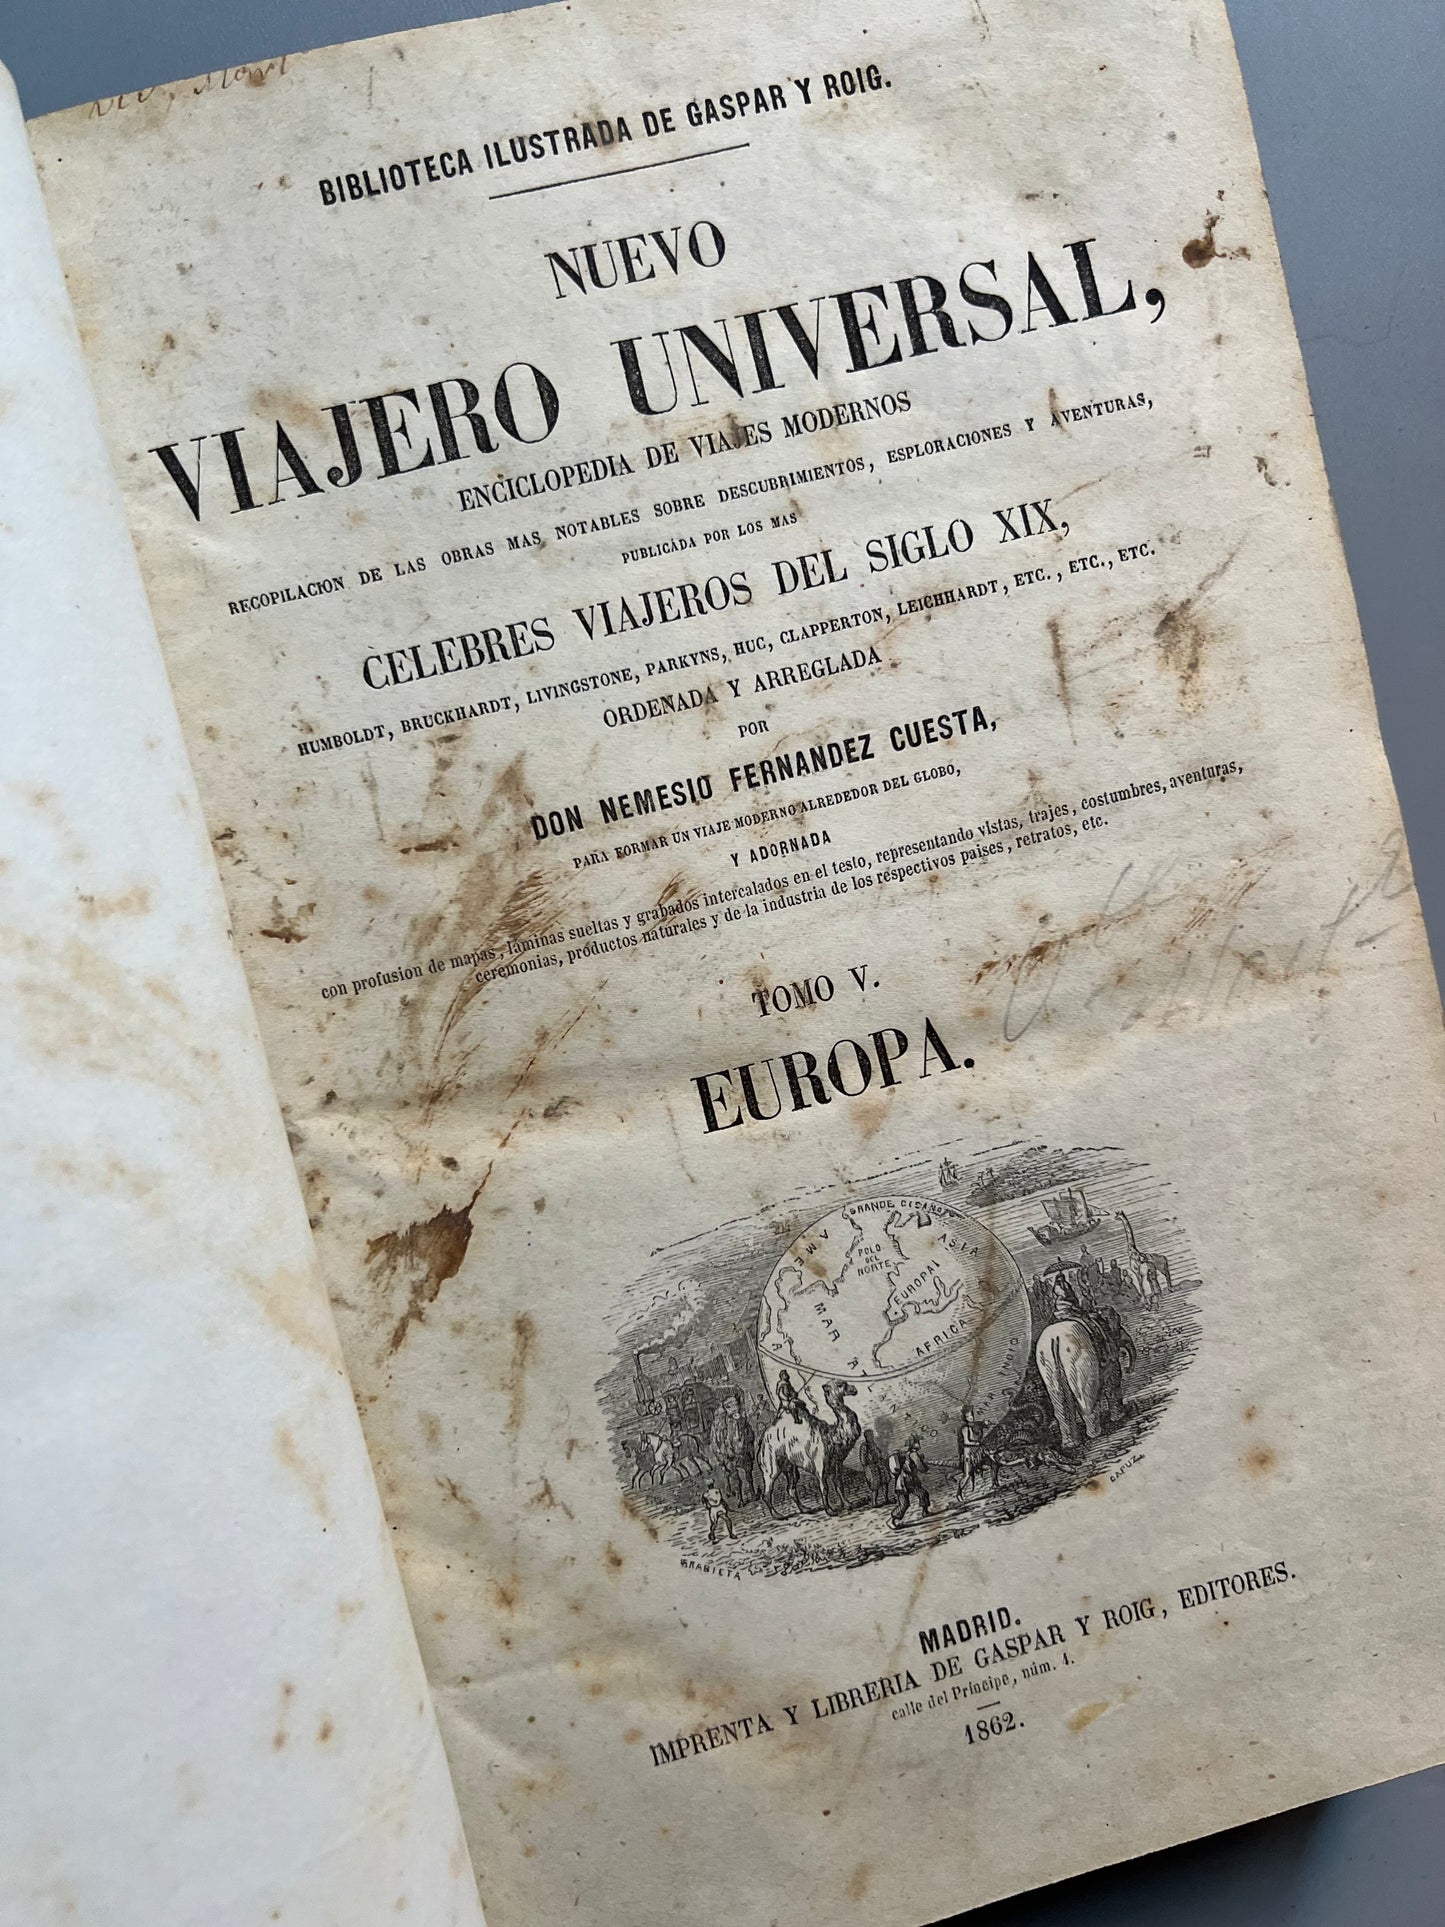 Nuevo viajero universal, Biblioteca ilustrada de Gaspar y Roig - 1859/1862